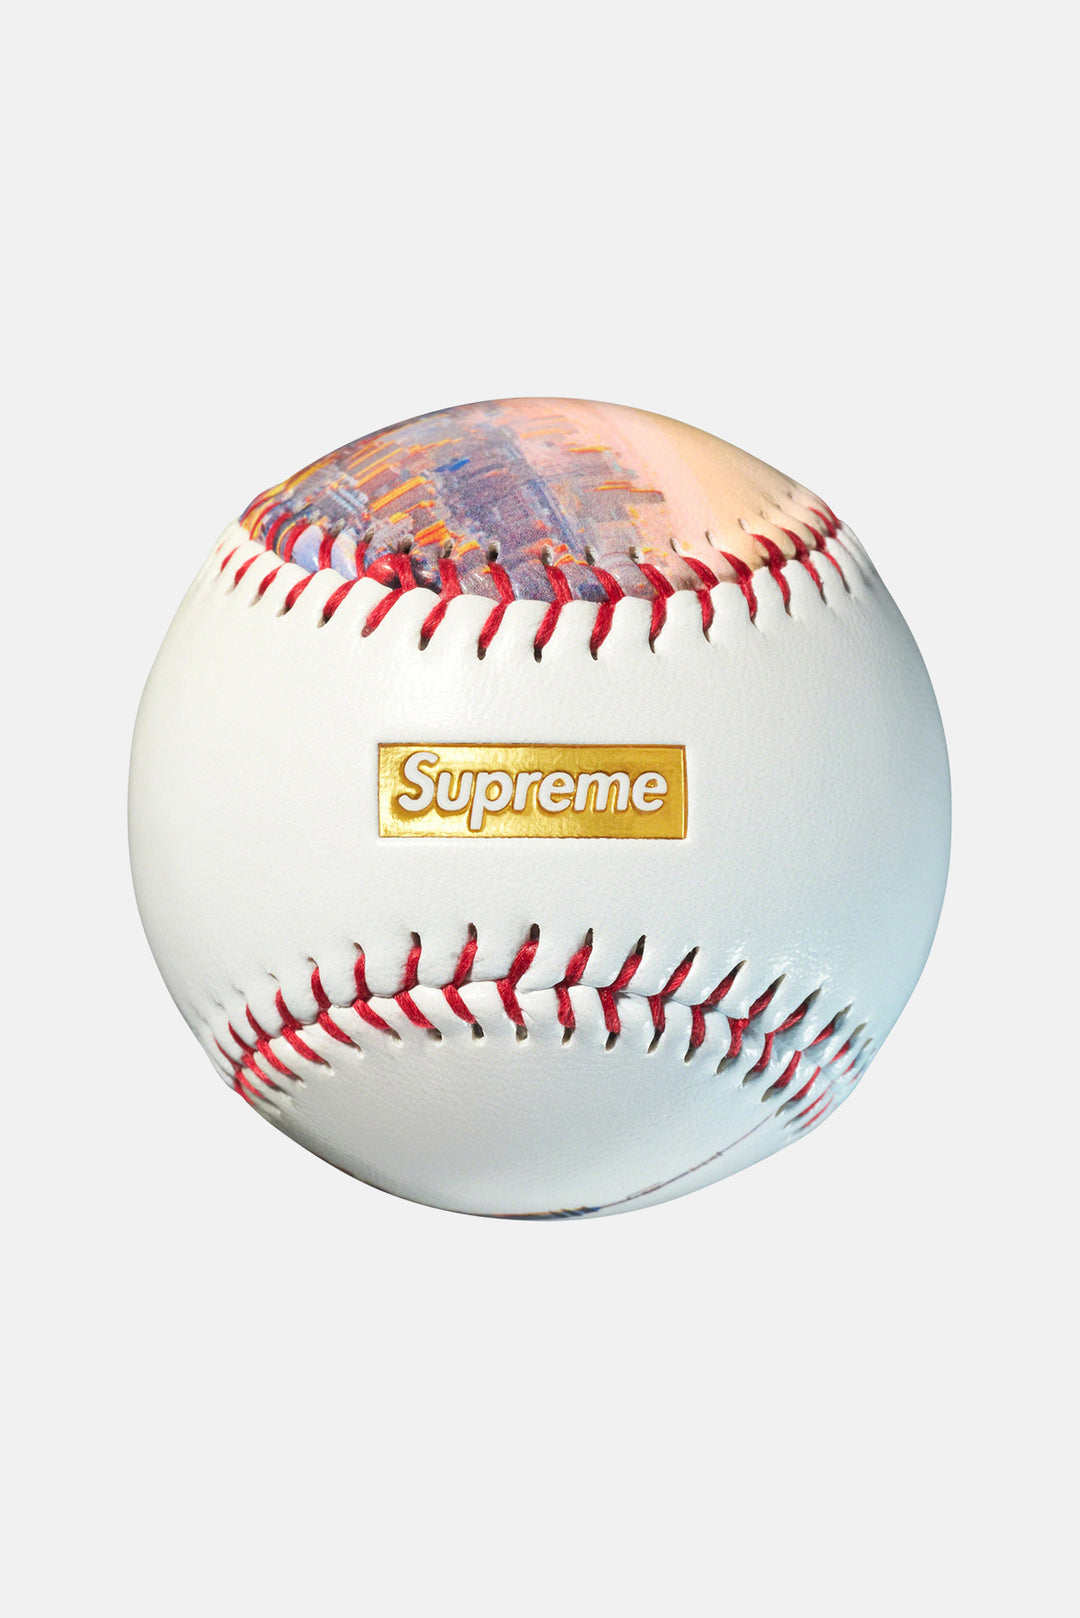 Supreme x Rawlings Aerial Baseball